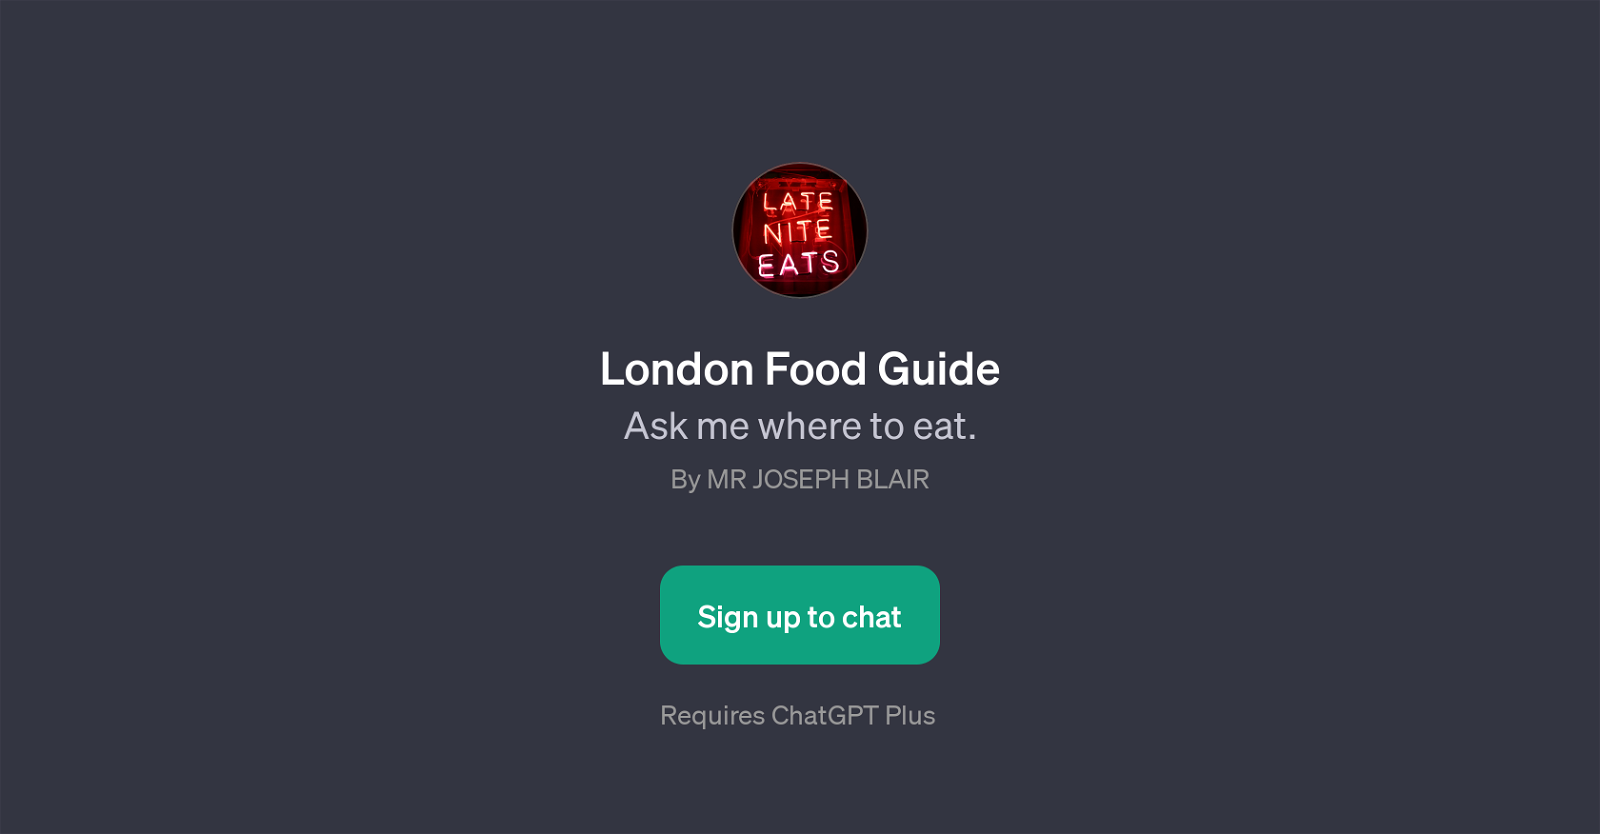 London Food Guide website